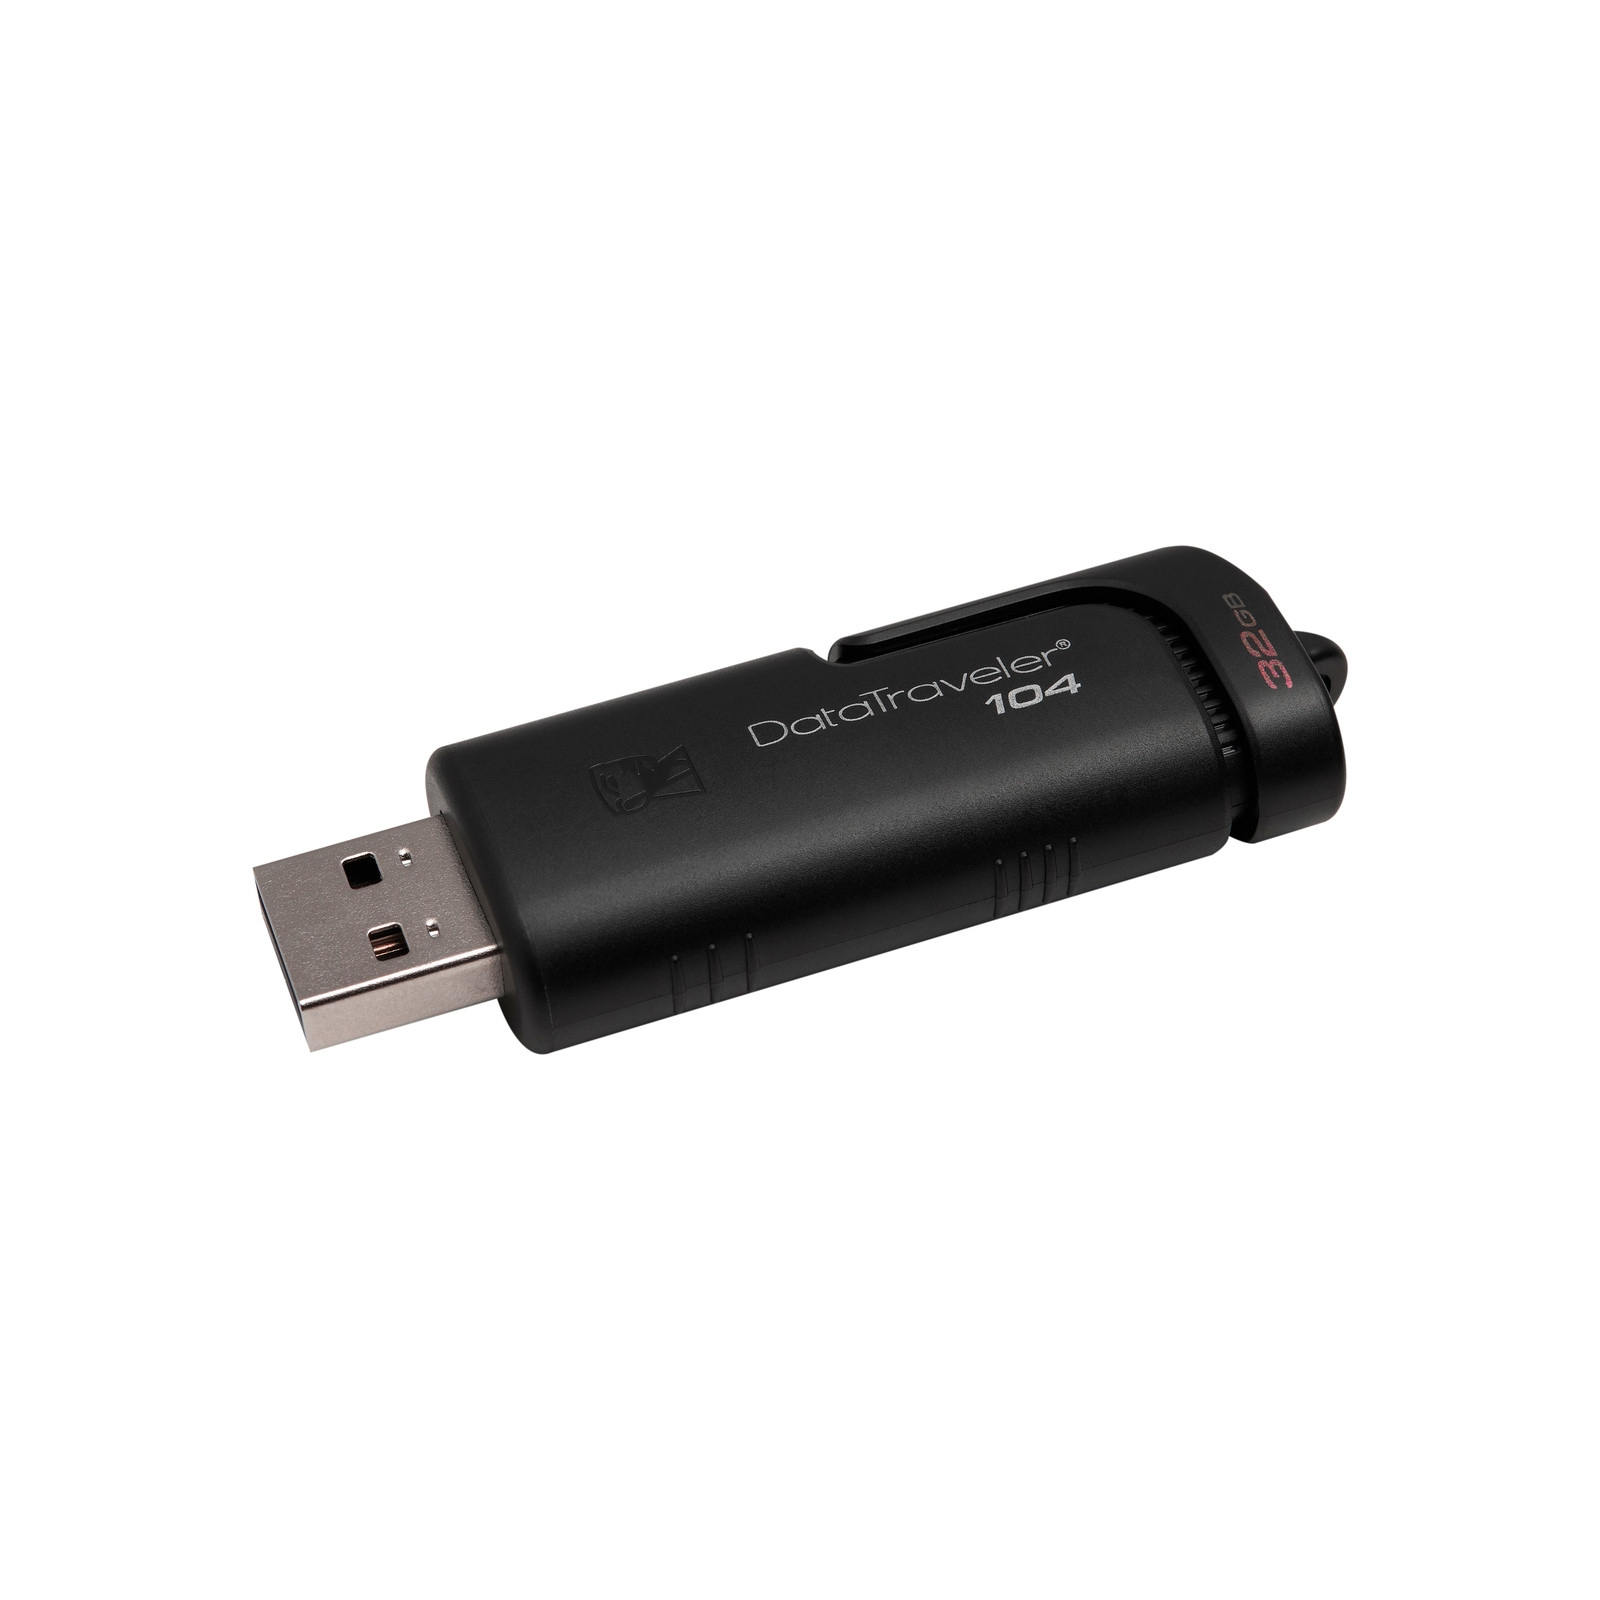 USB флеш накопитель Kingston 32GB DataTraveller 104 Black USB 2.0 (DT104/32GB) изображение 5